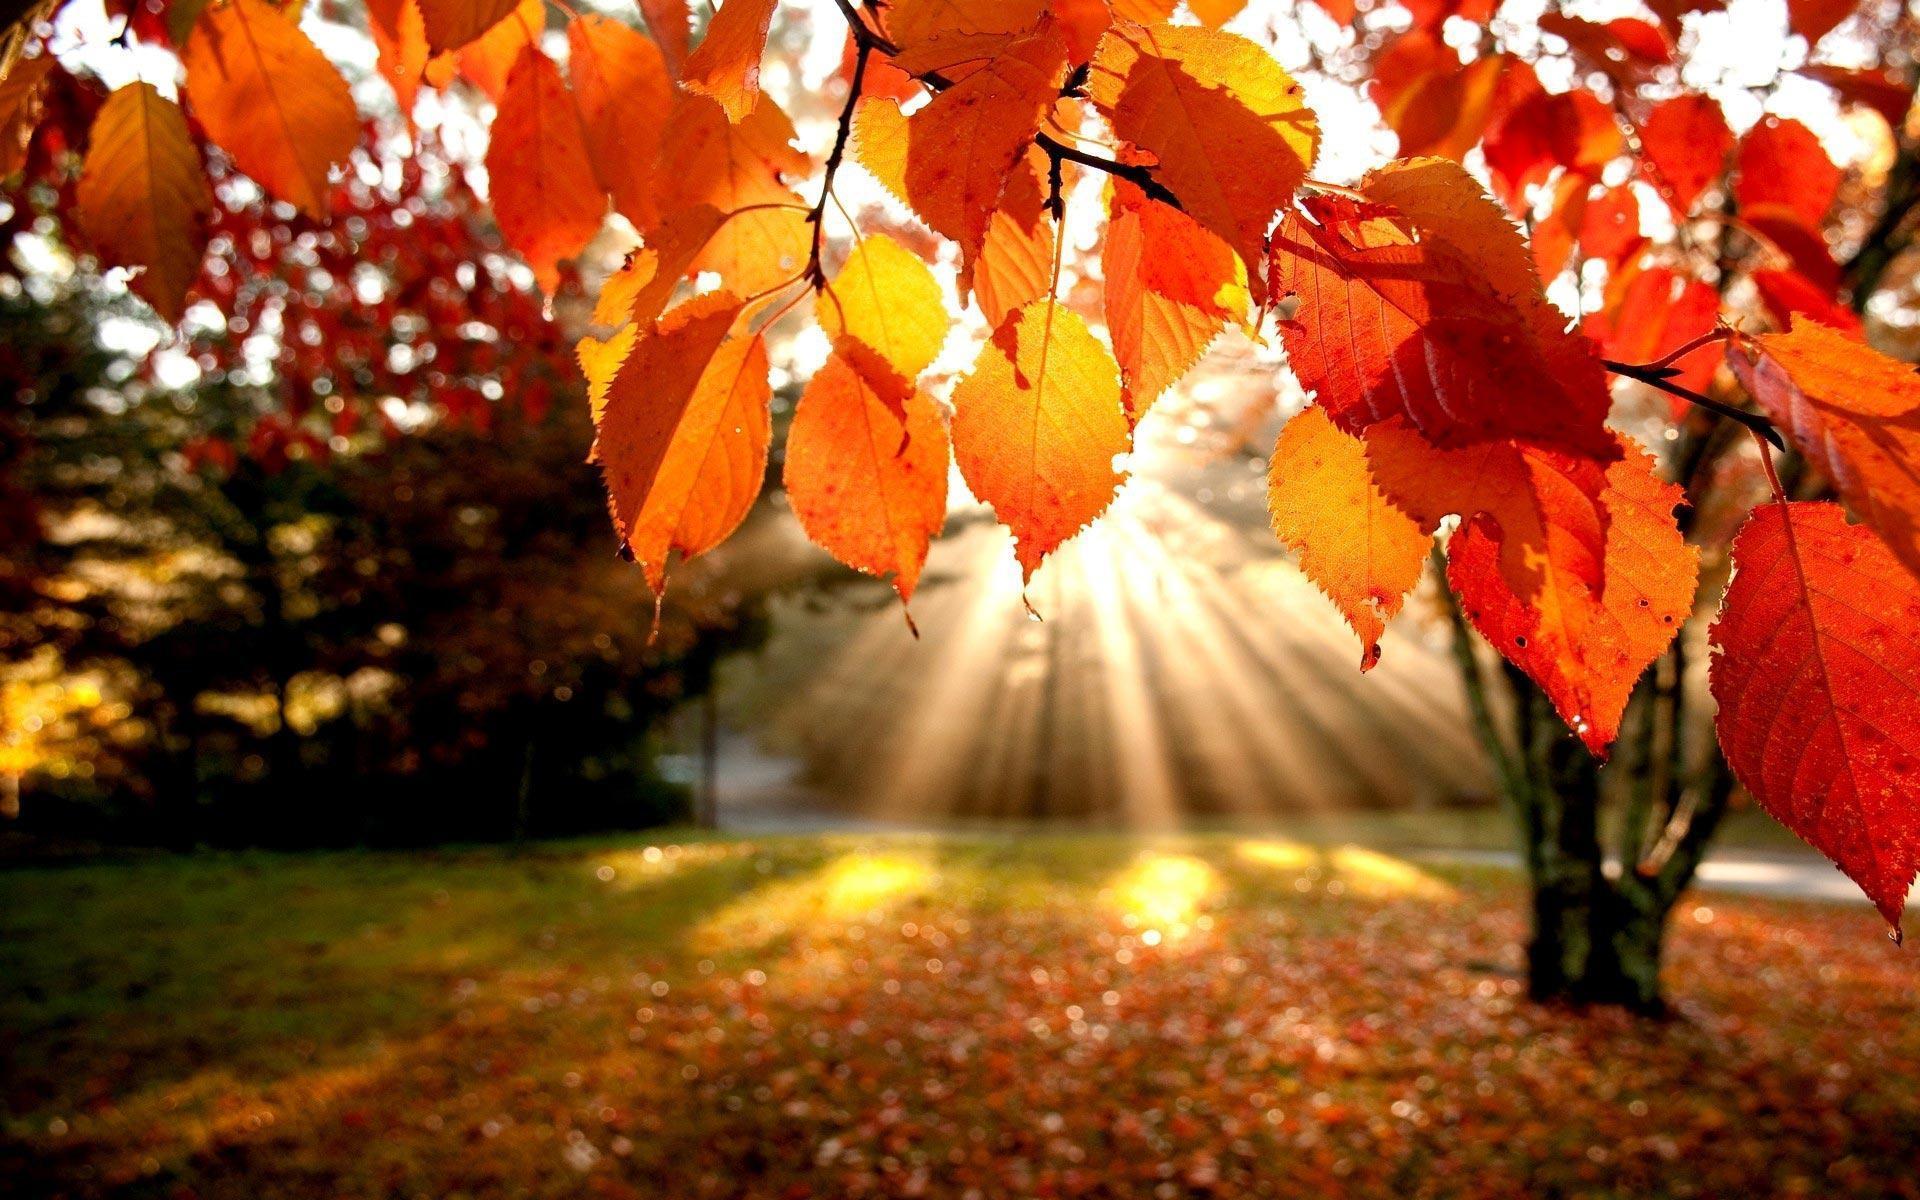 Download wallpaper: leaves, autumn, desktop wallpaper